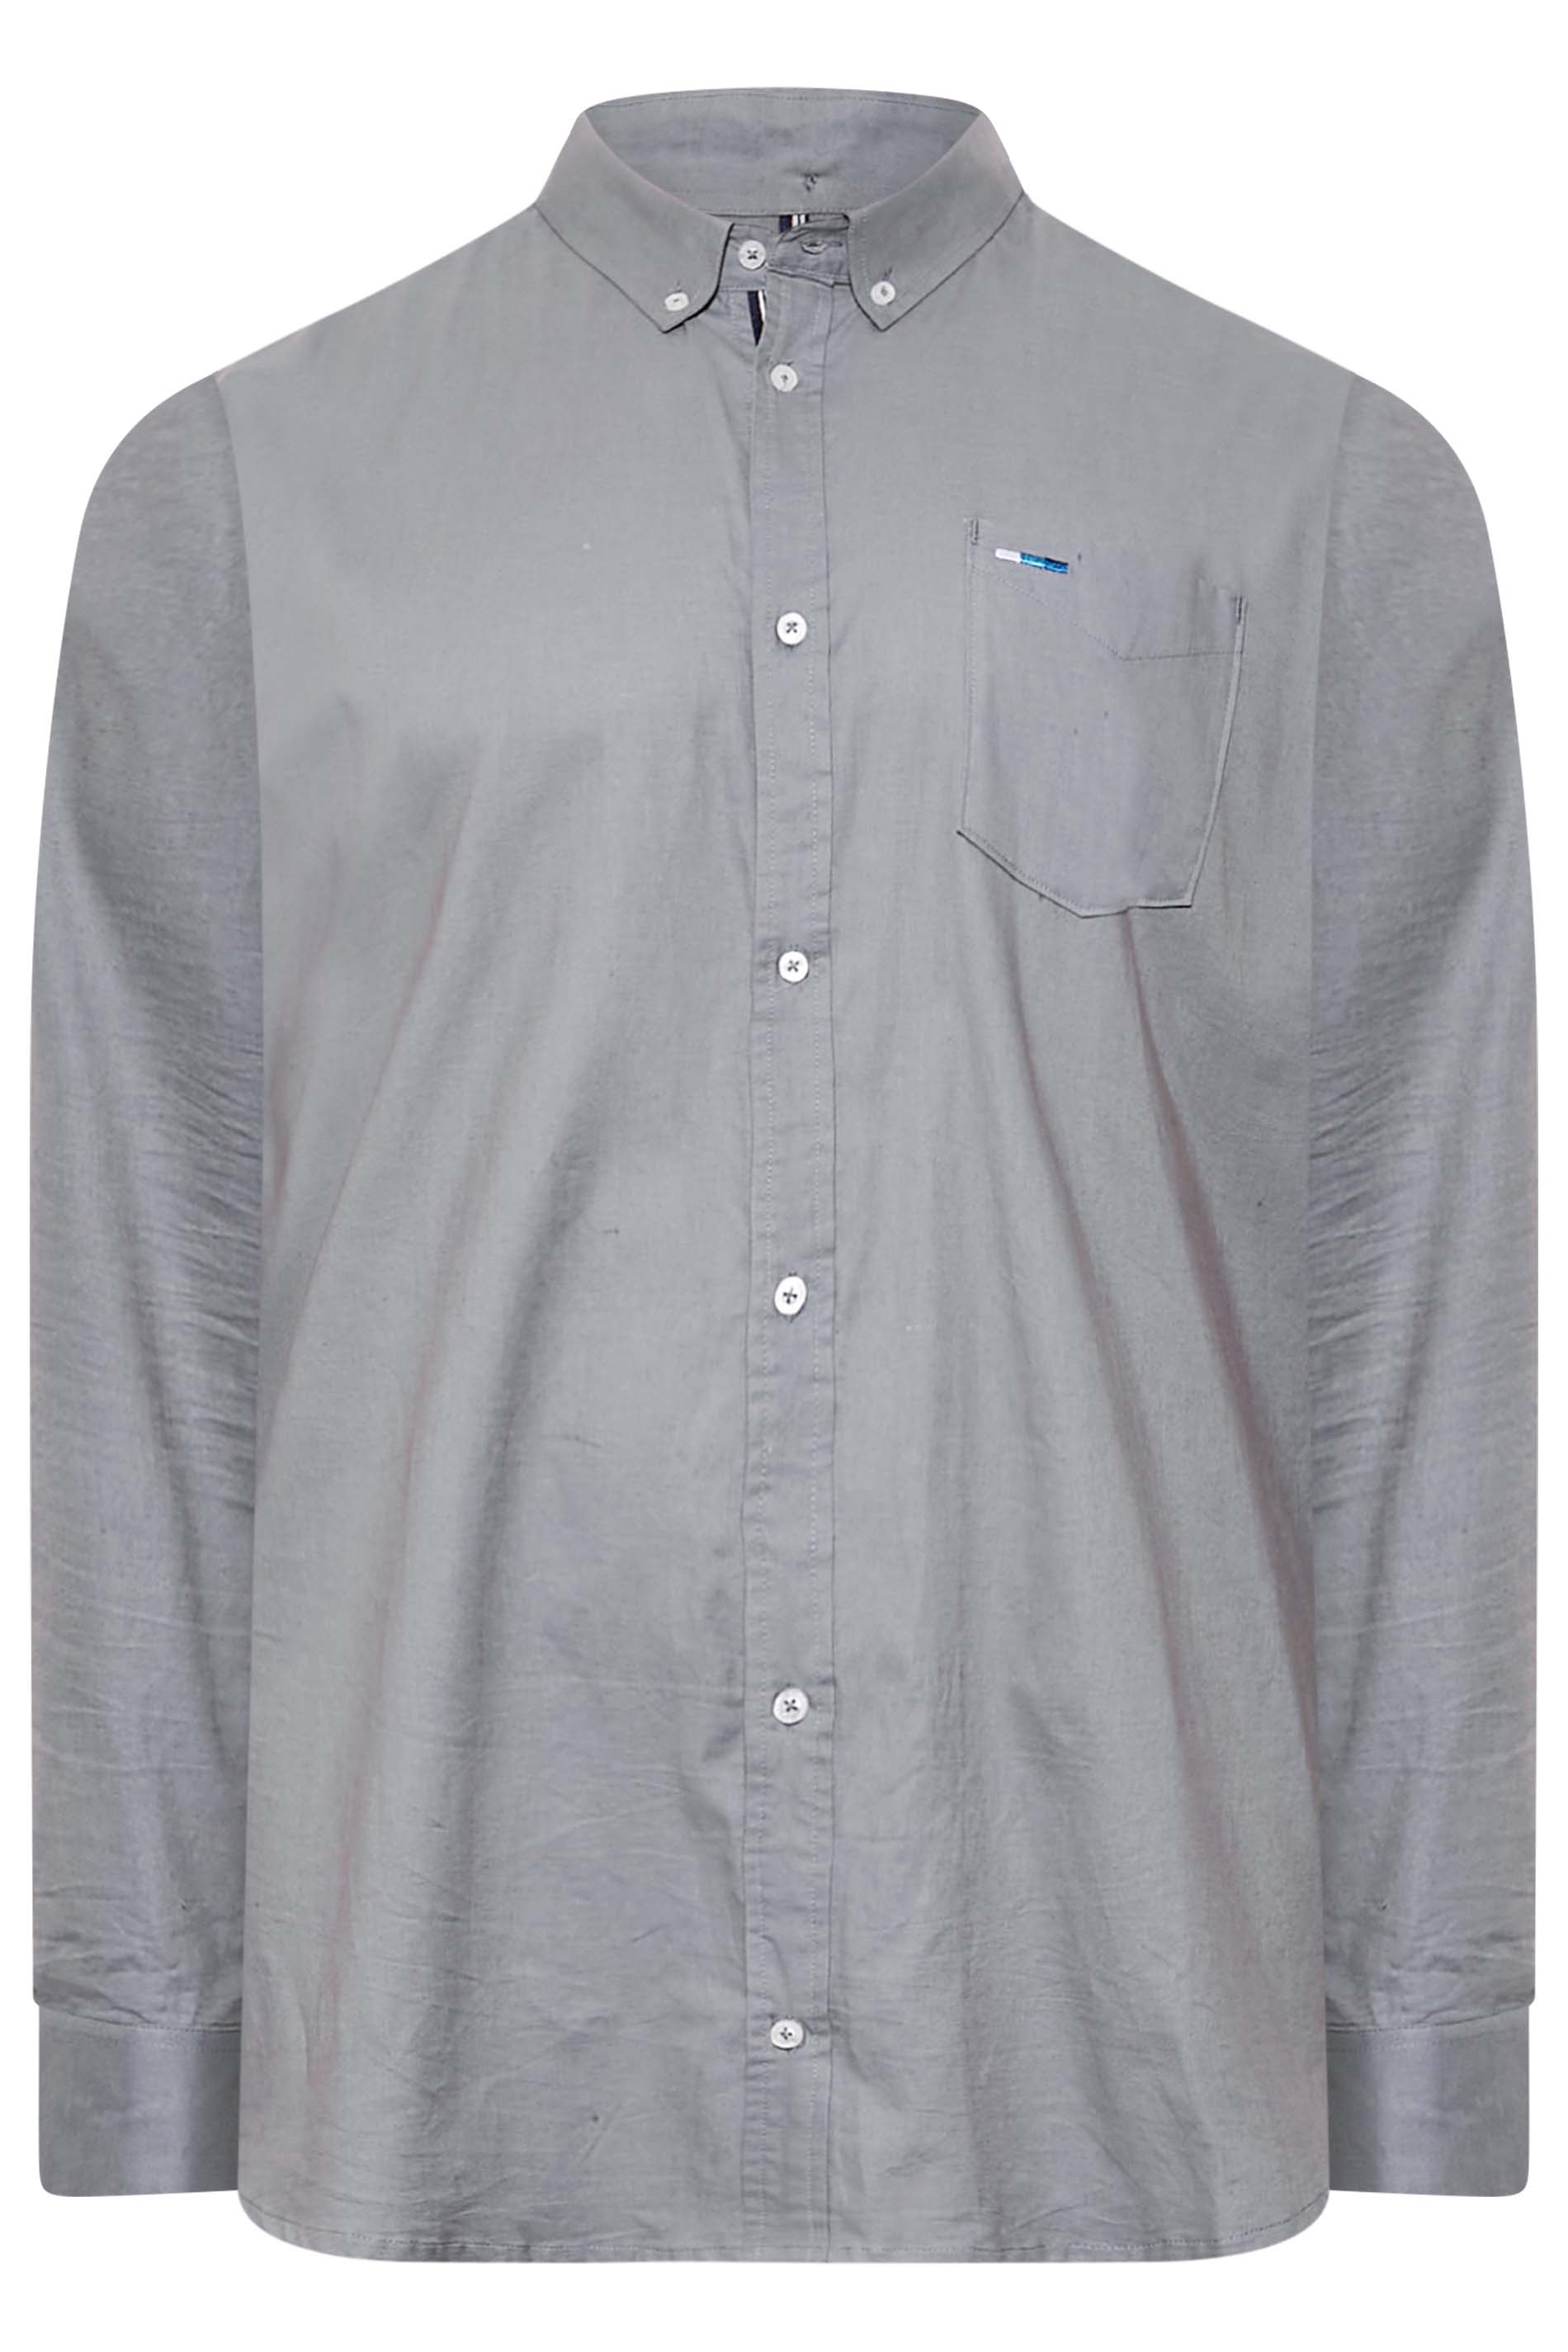 BadRhino Big & Tall Grey Long Sleeve Oxford Shirt 1